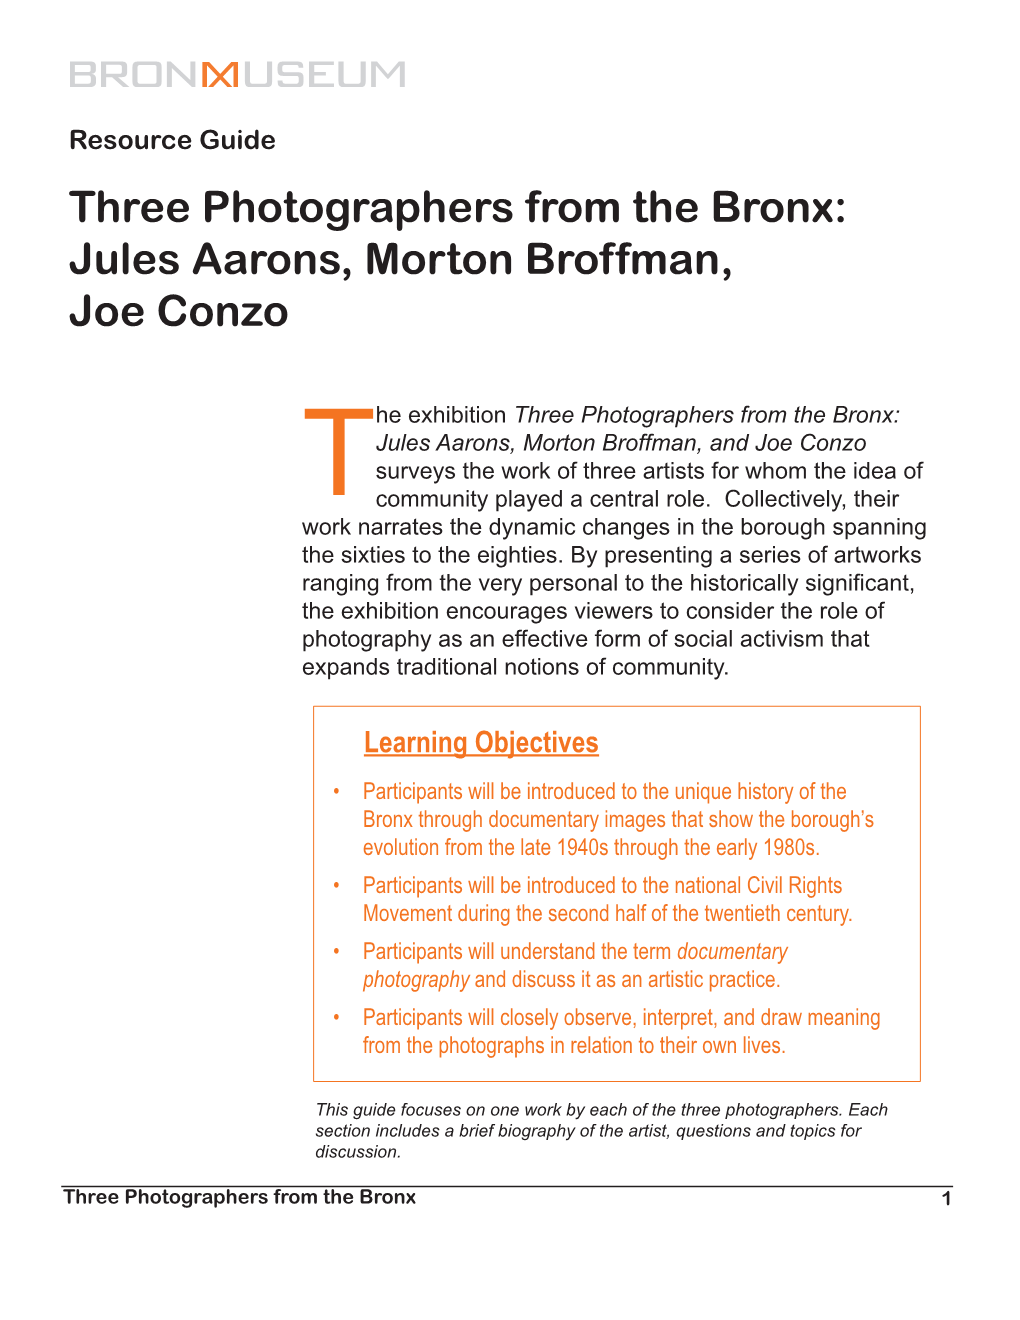 Three Photographers from the Bronx: Jules Aarons, Morton Broffman, Joe Conzo